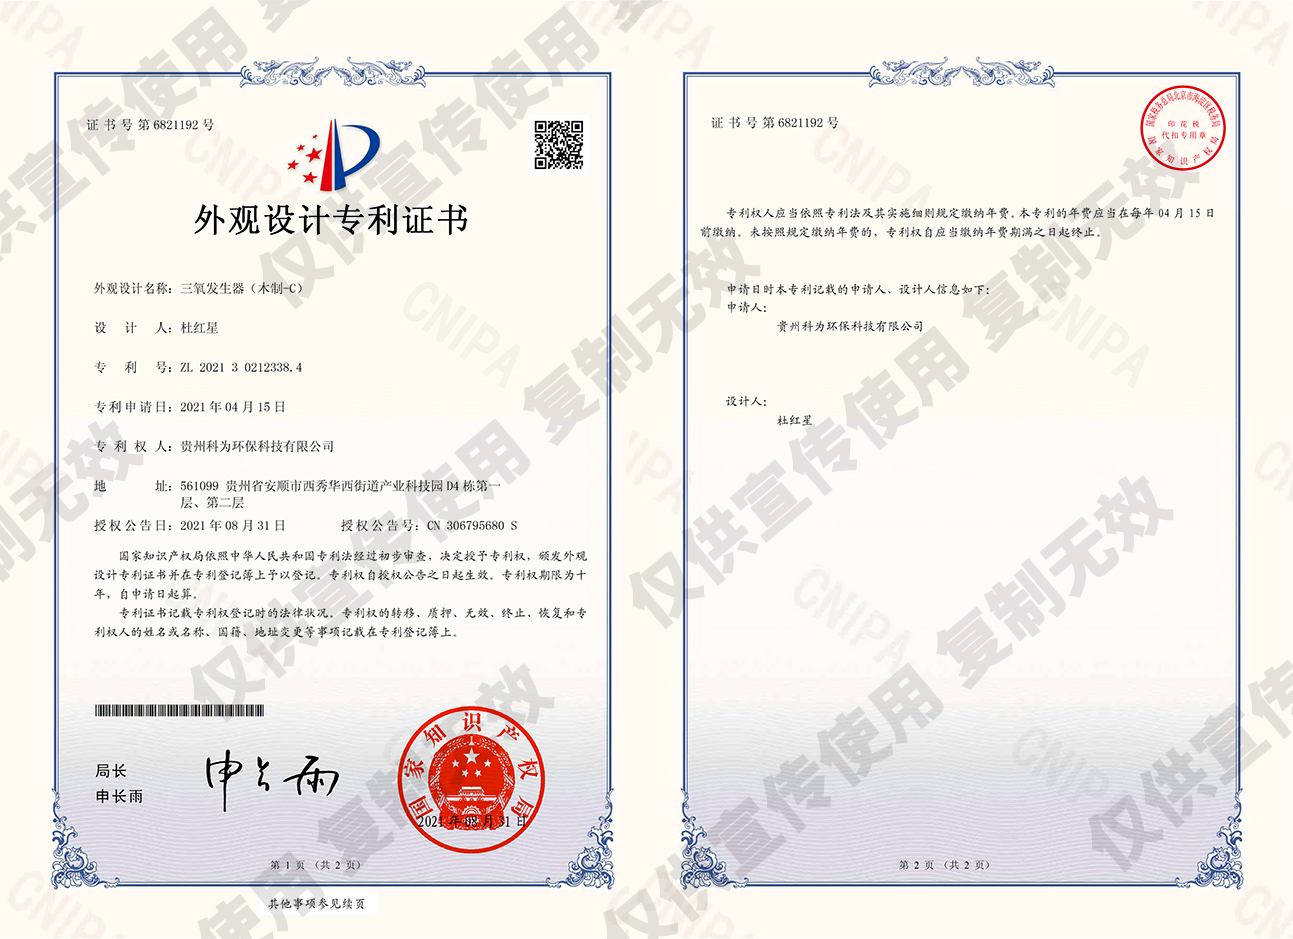 O3 Generator (Wooden-C) Design Patent Certificate (6821192)